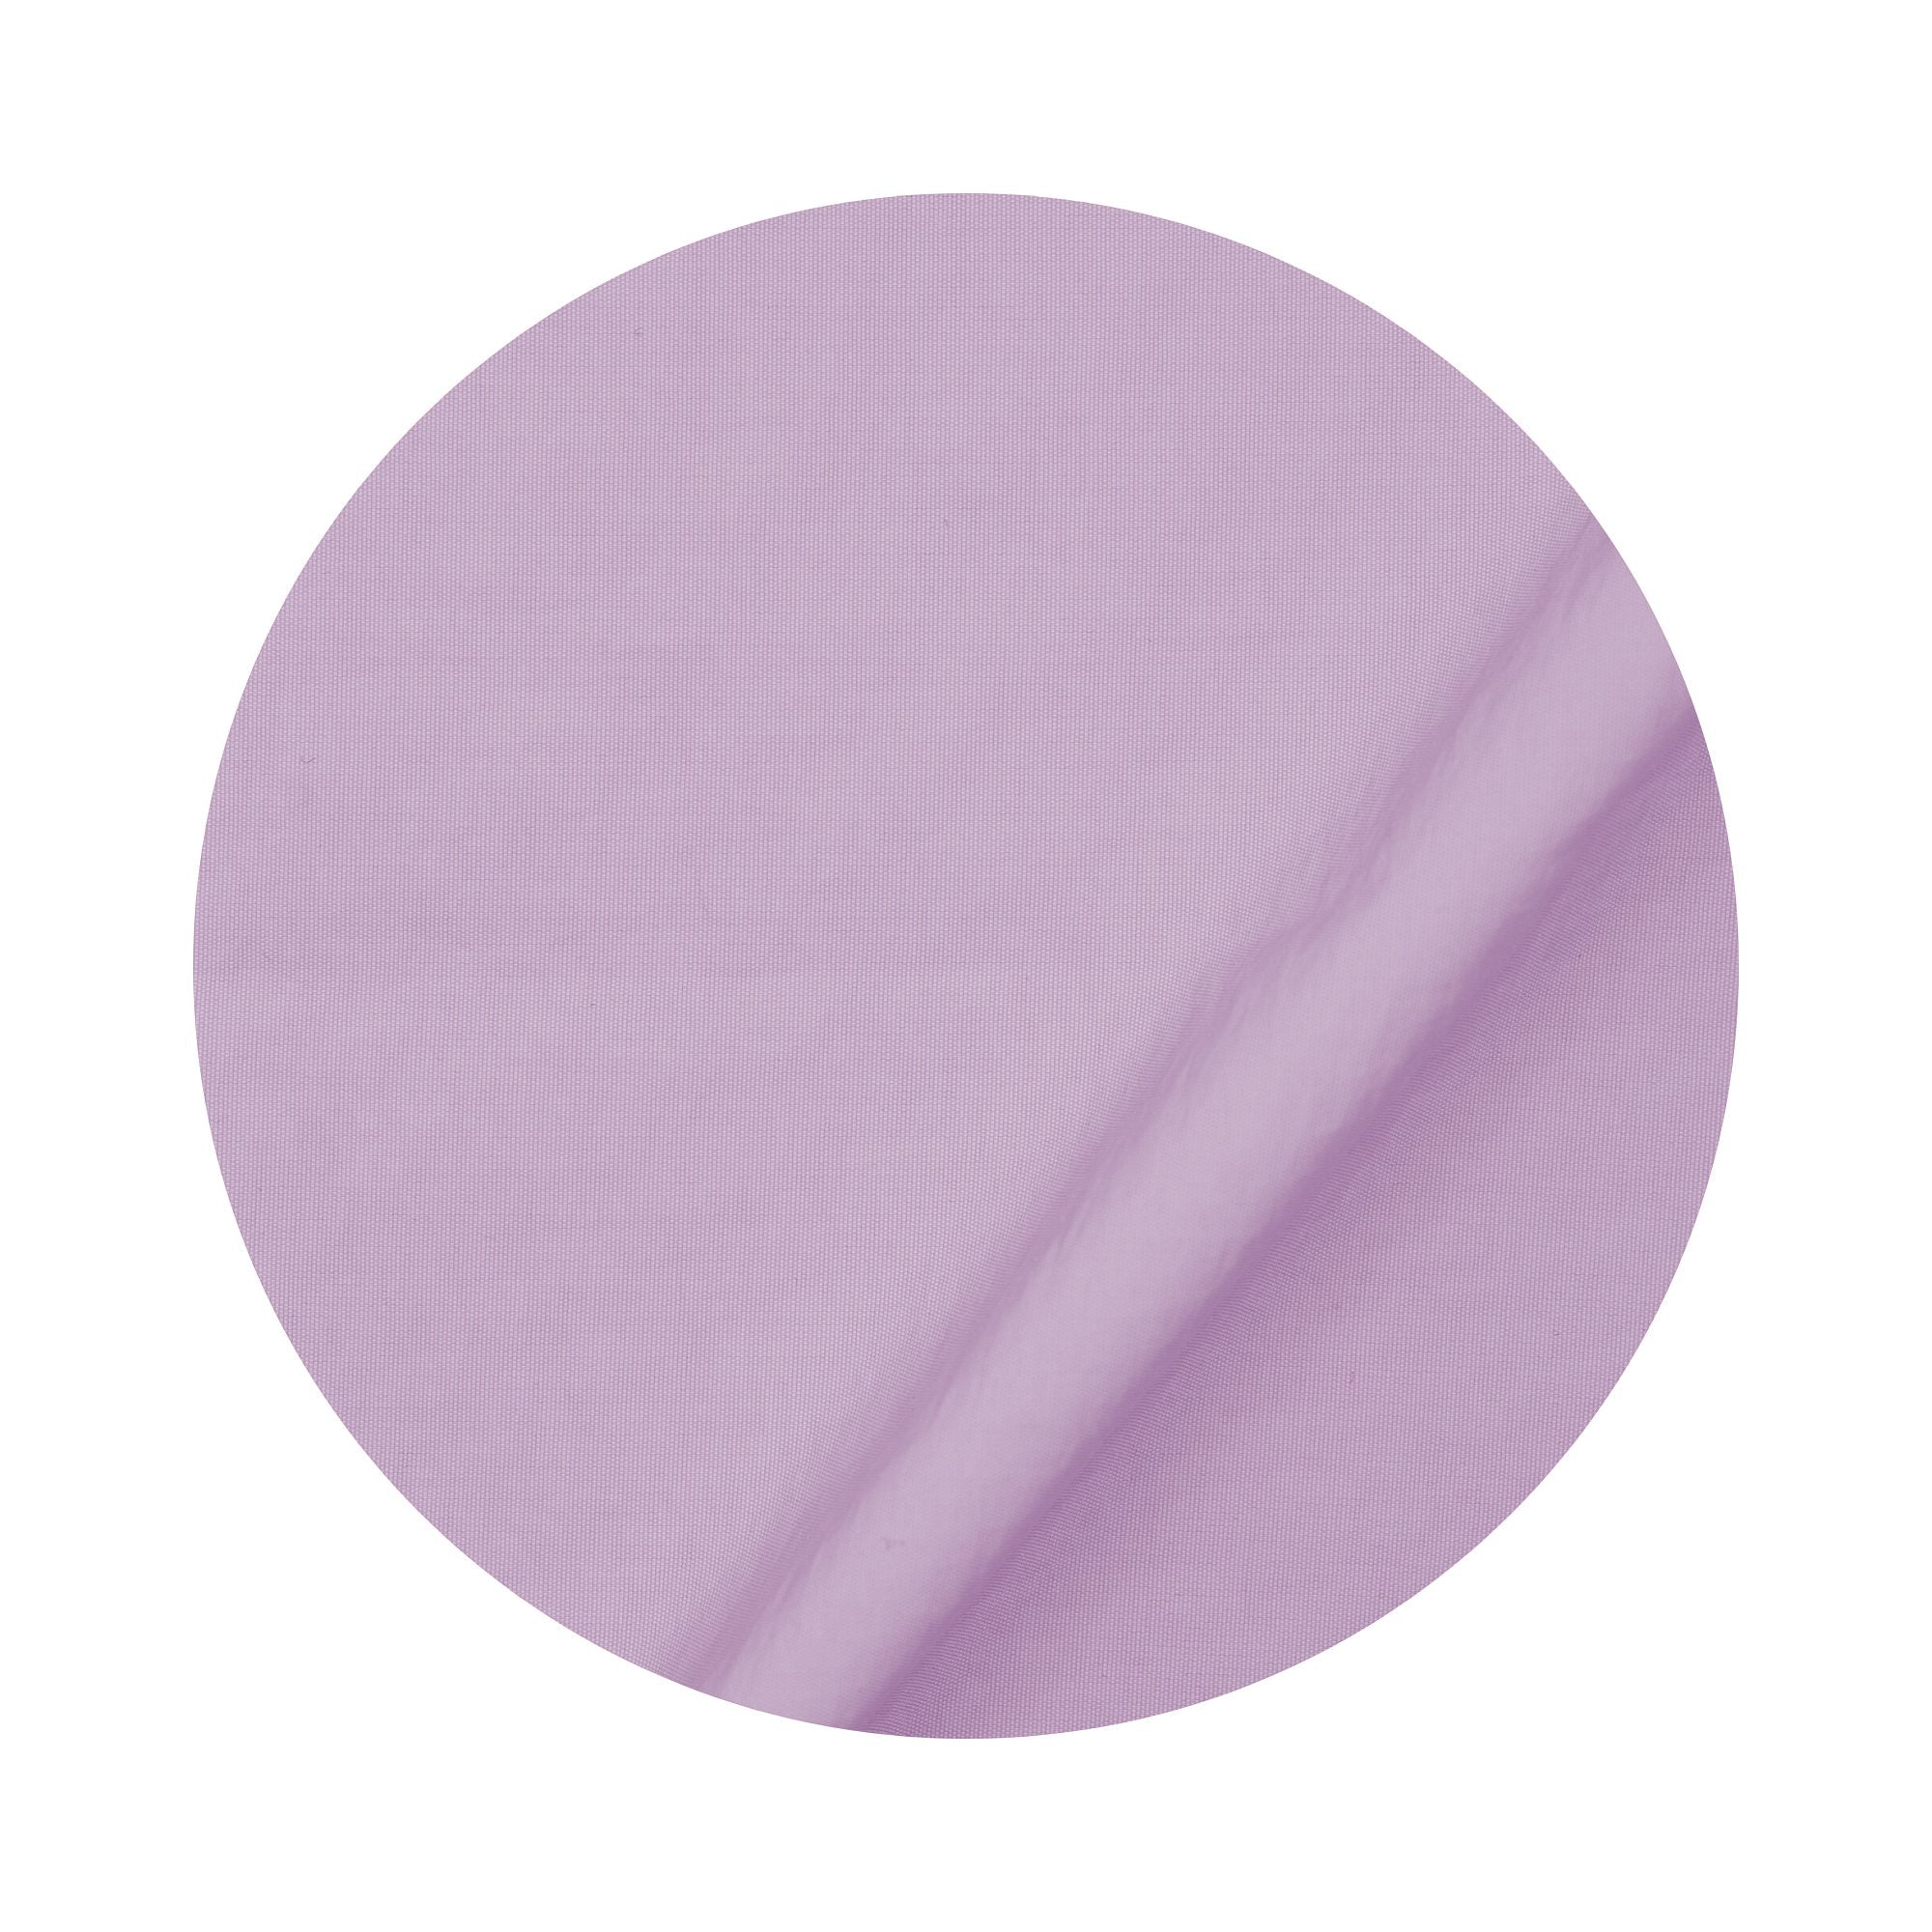 4 oz. 4-Ply Textured Nylon Taslan Fabric - TVF